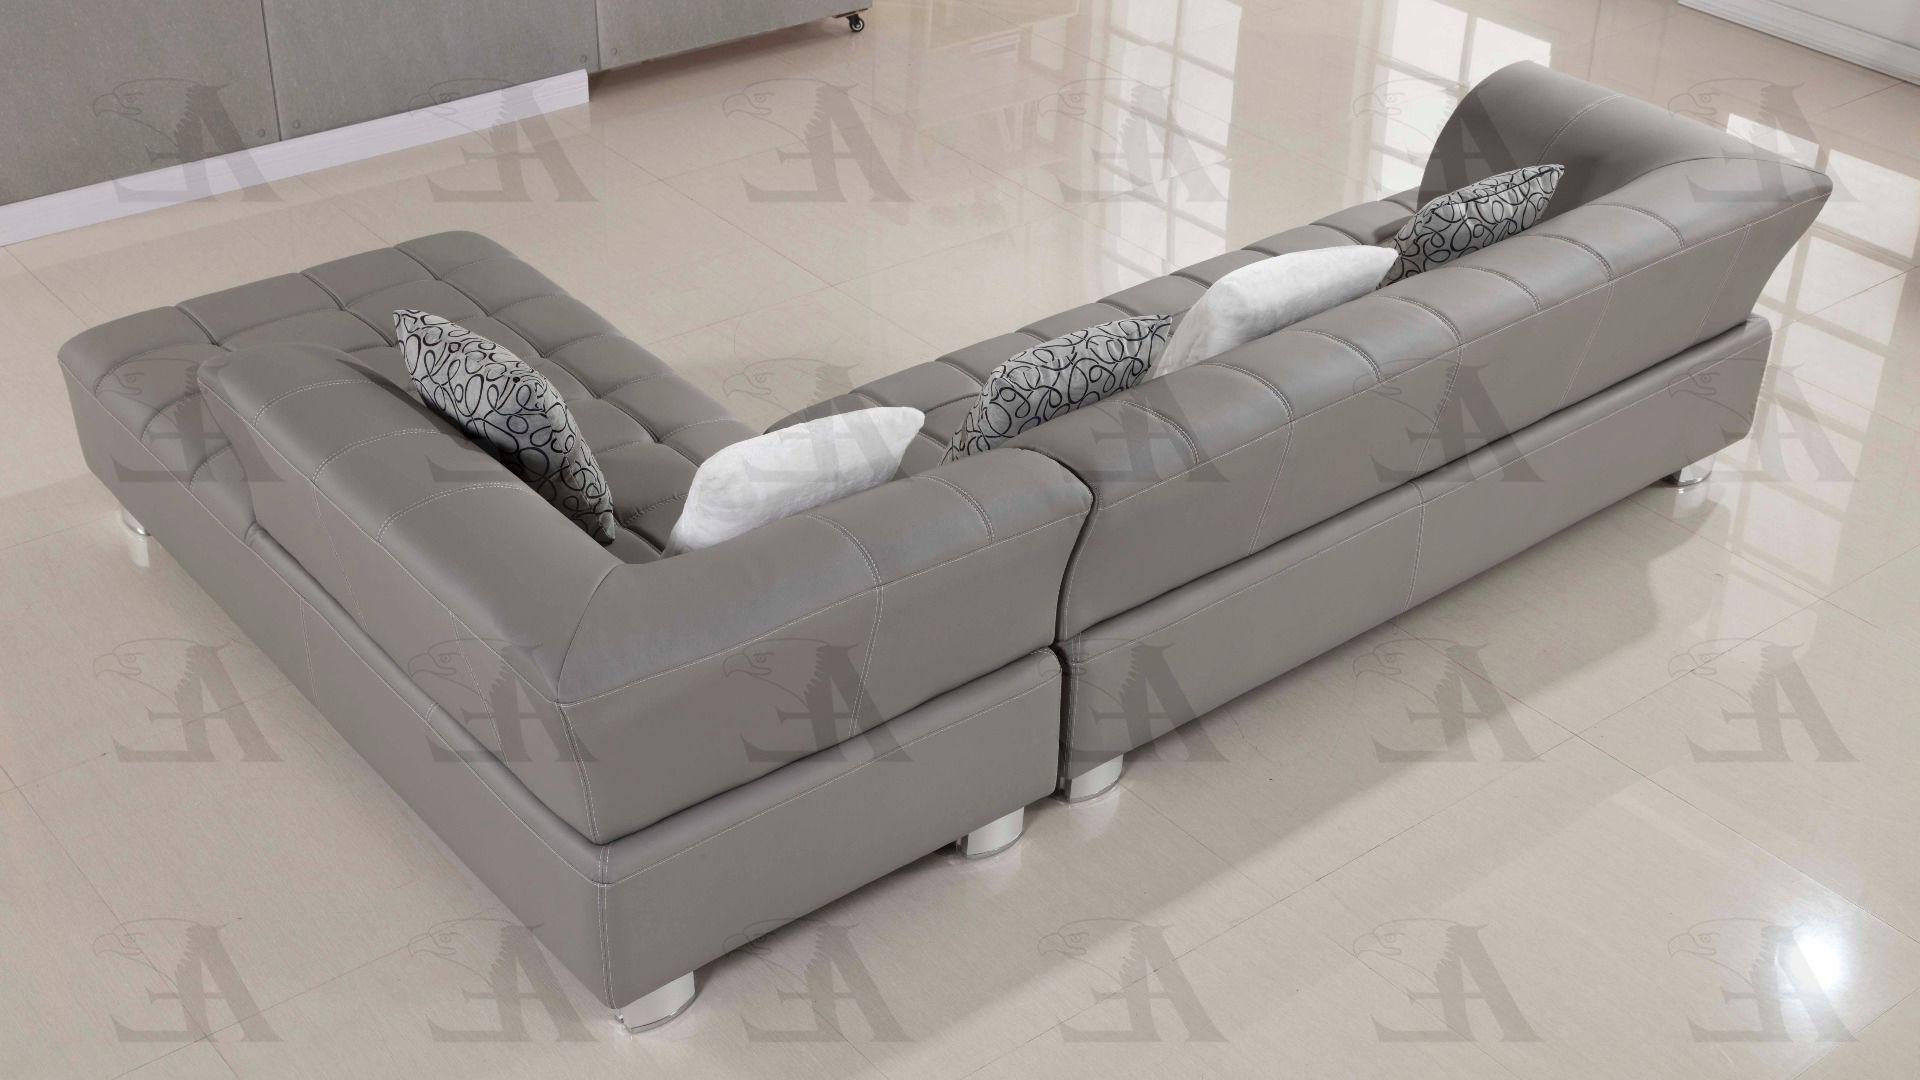 

    
AE-L138R-GR American Eagle Furniture Sectional Sofa Set
